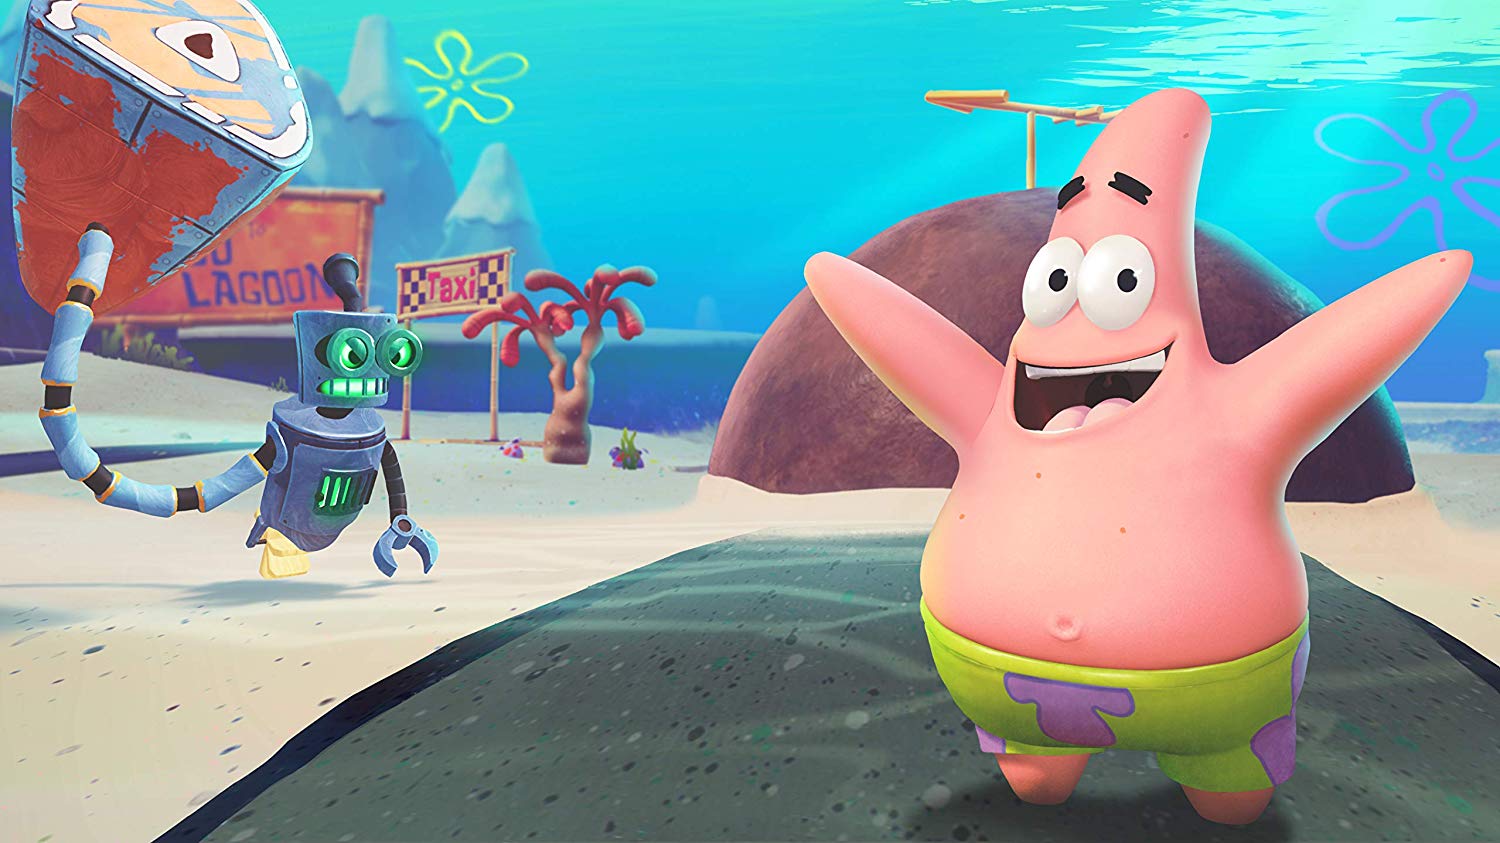 Spongebob Squarepants: Battle for Bikini Bottom - Rehydrated - (NSW) Nintendo Switch Video Games THQ Nordic   